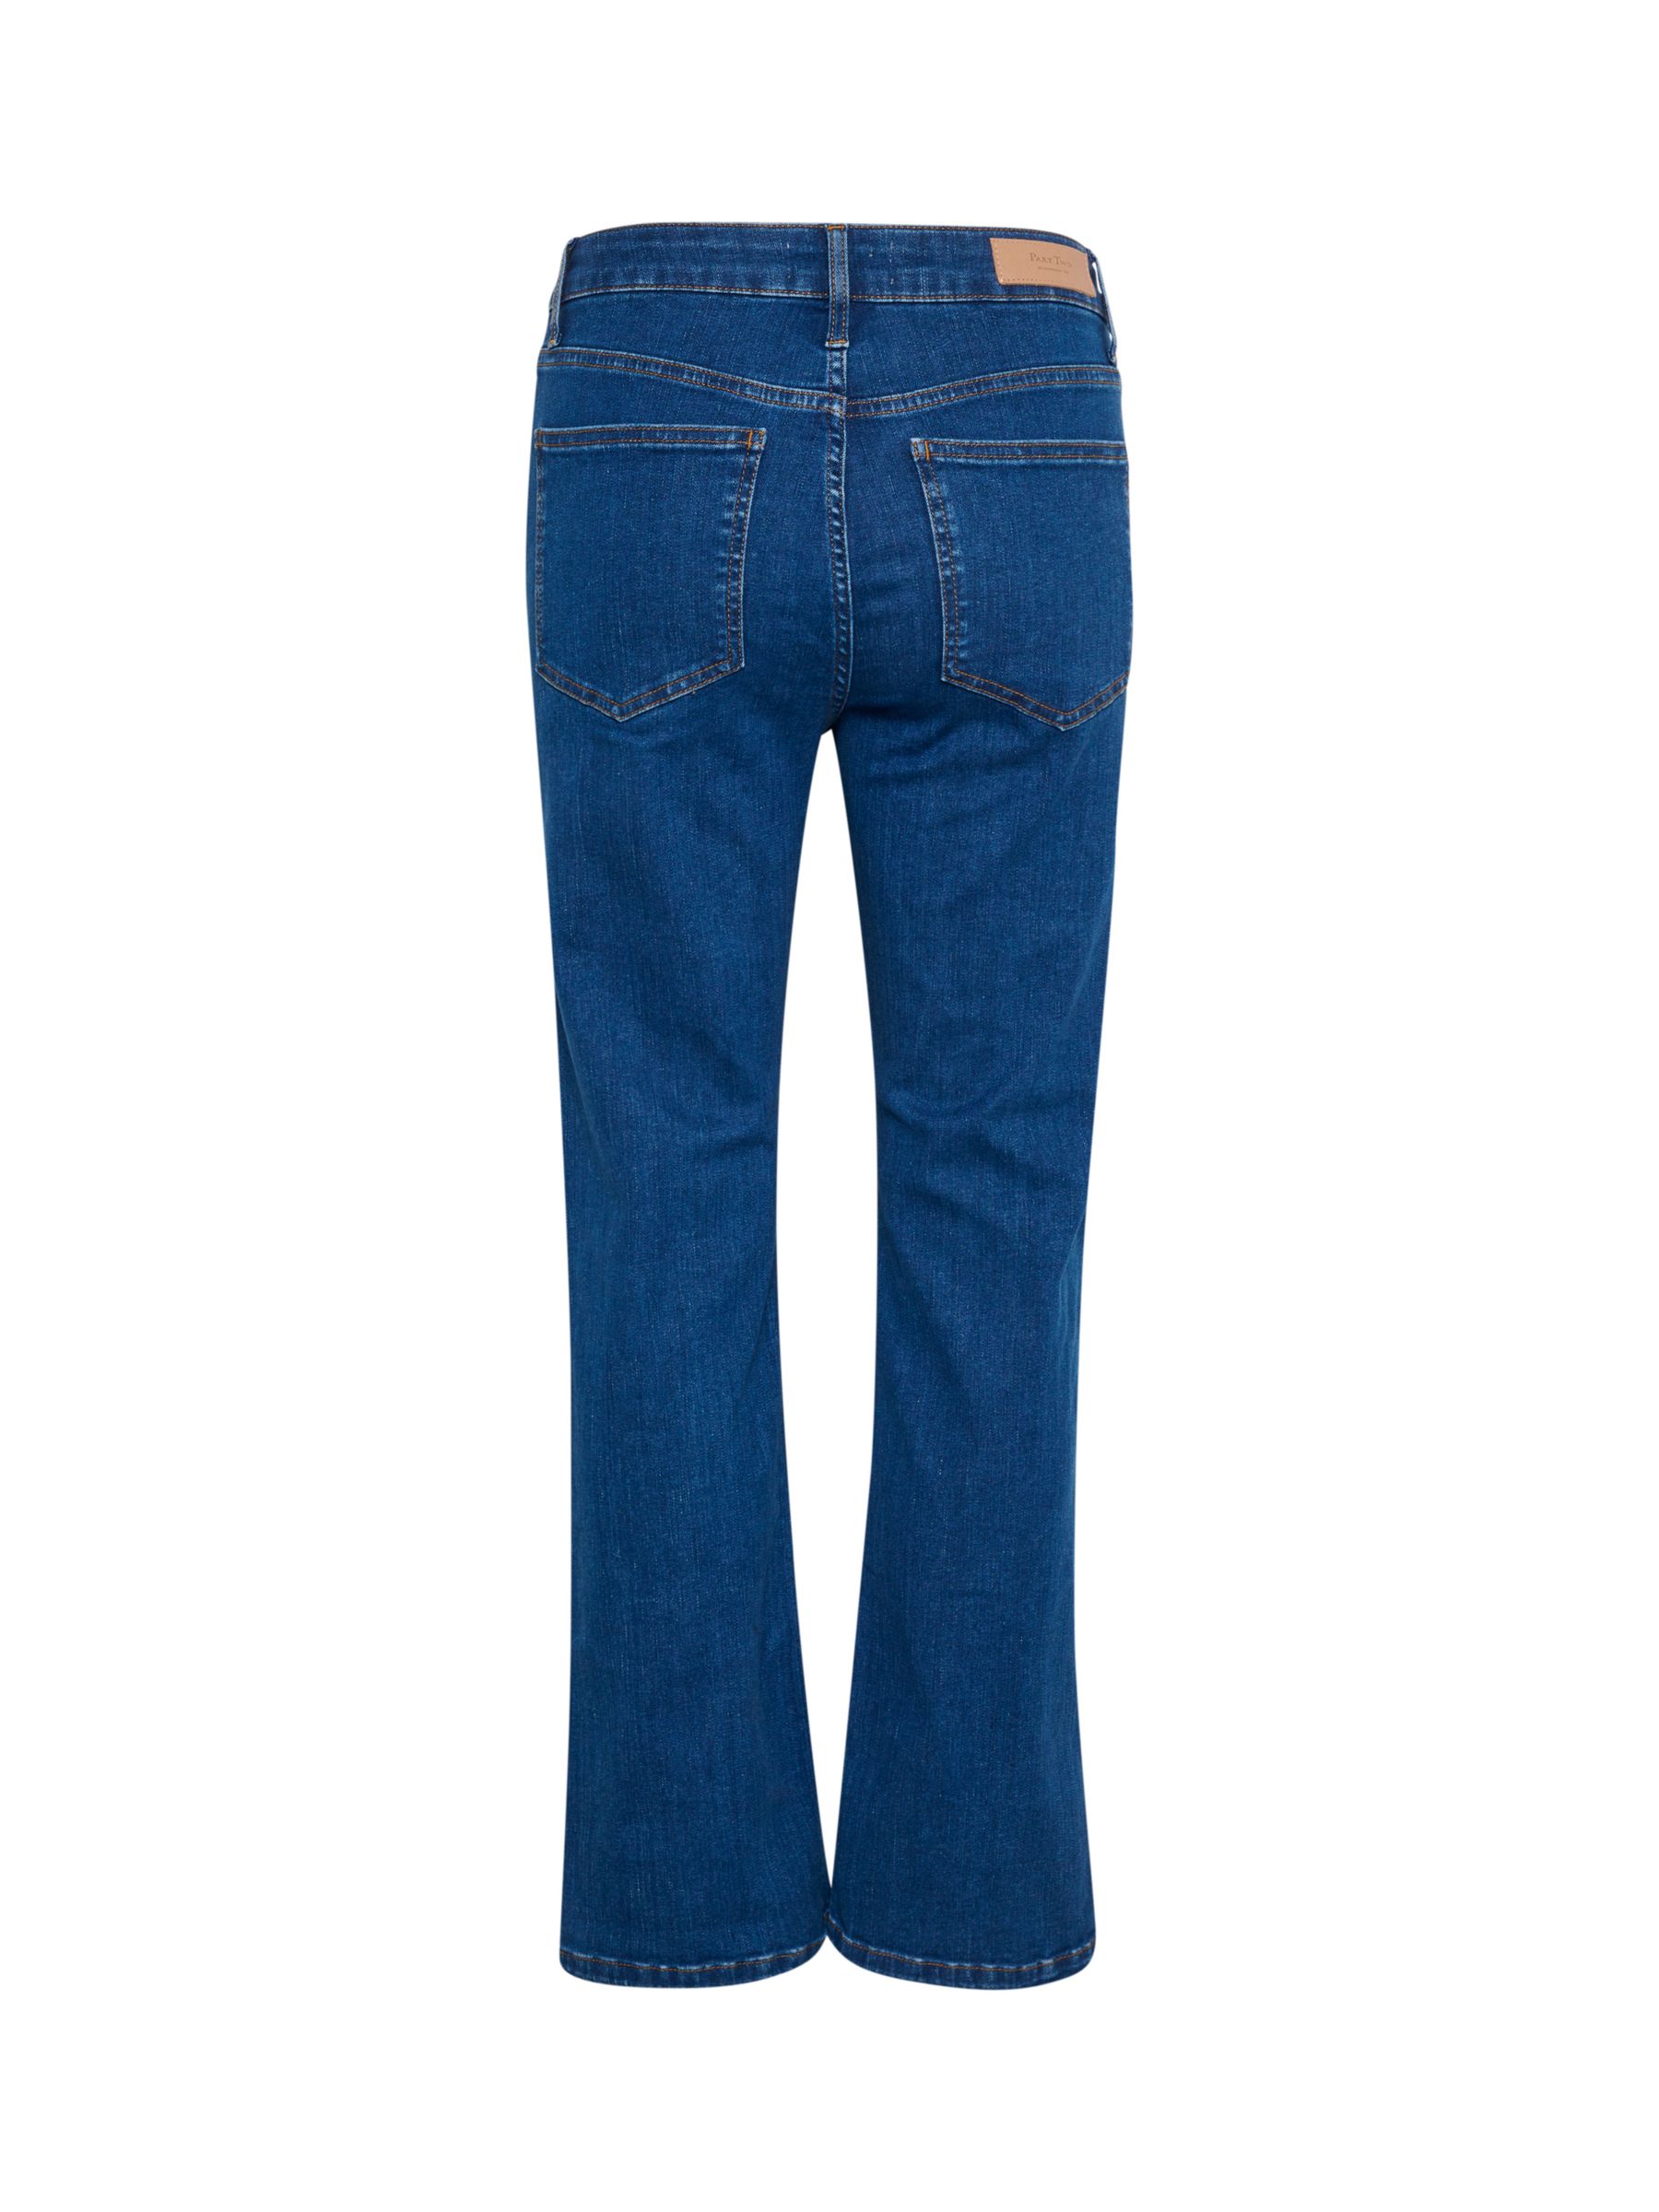 Buy Part Two Ryan Flared High Waist Jeans, Medium Blue Online at johnlewis.com